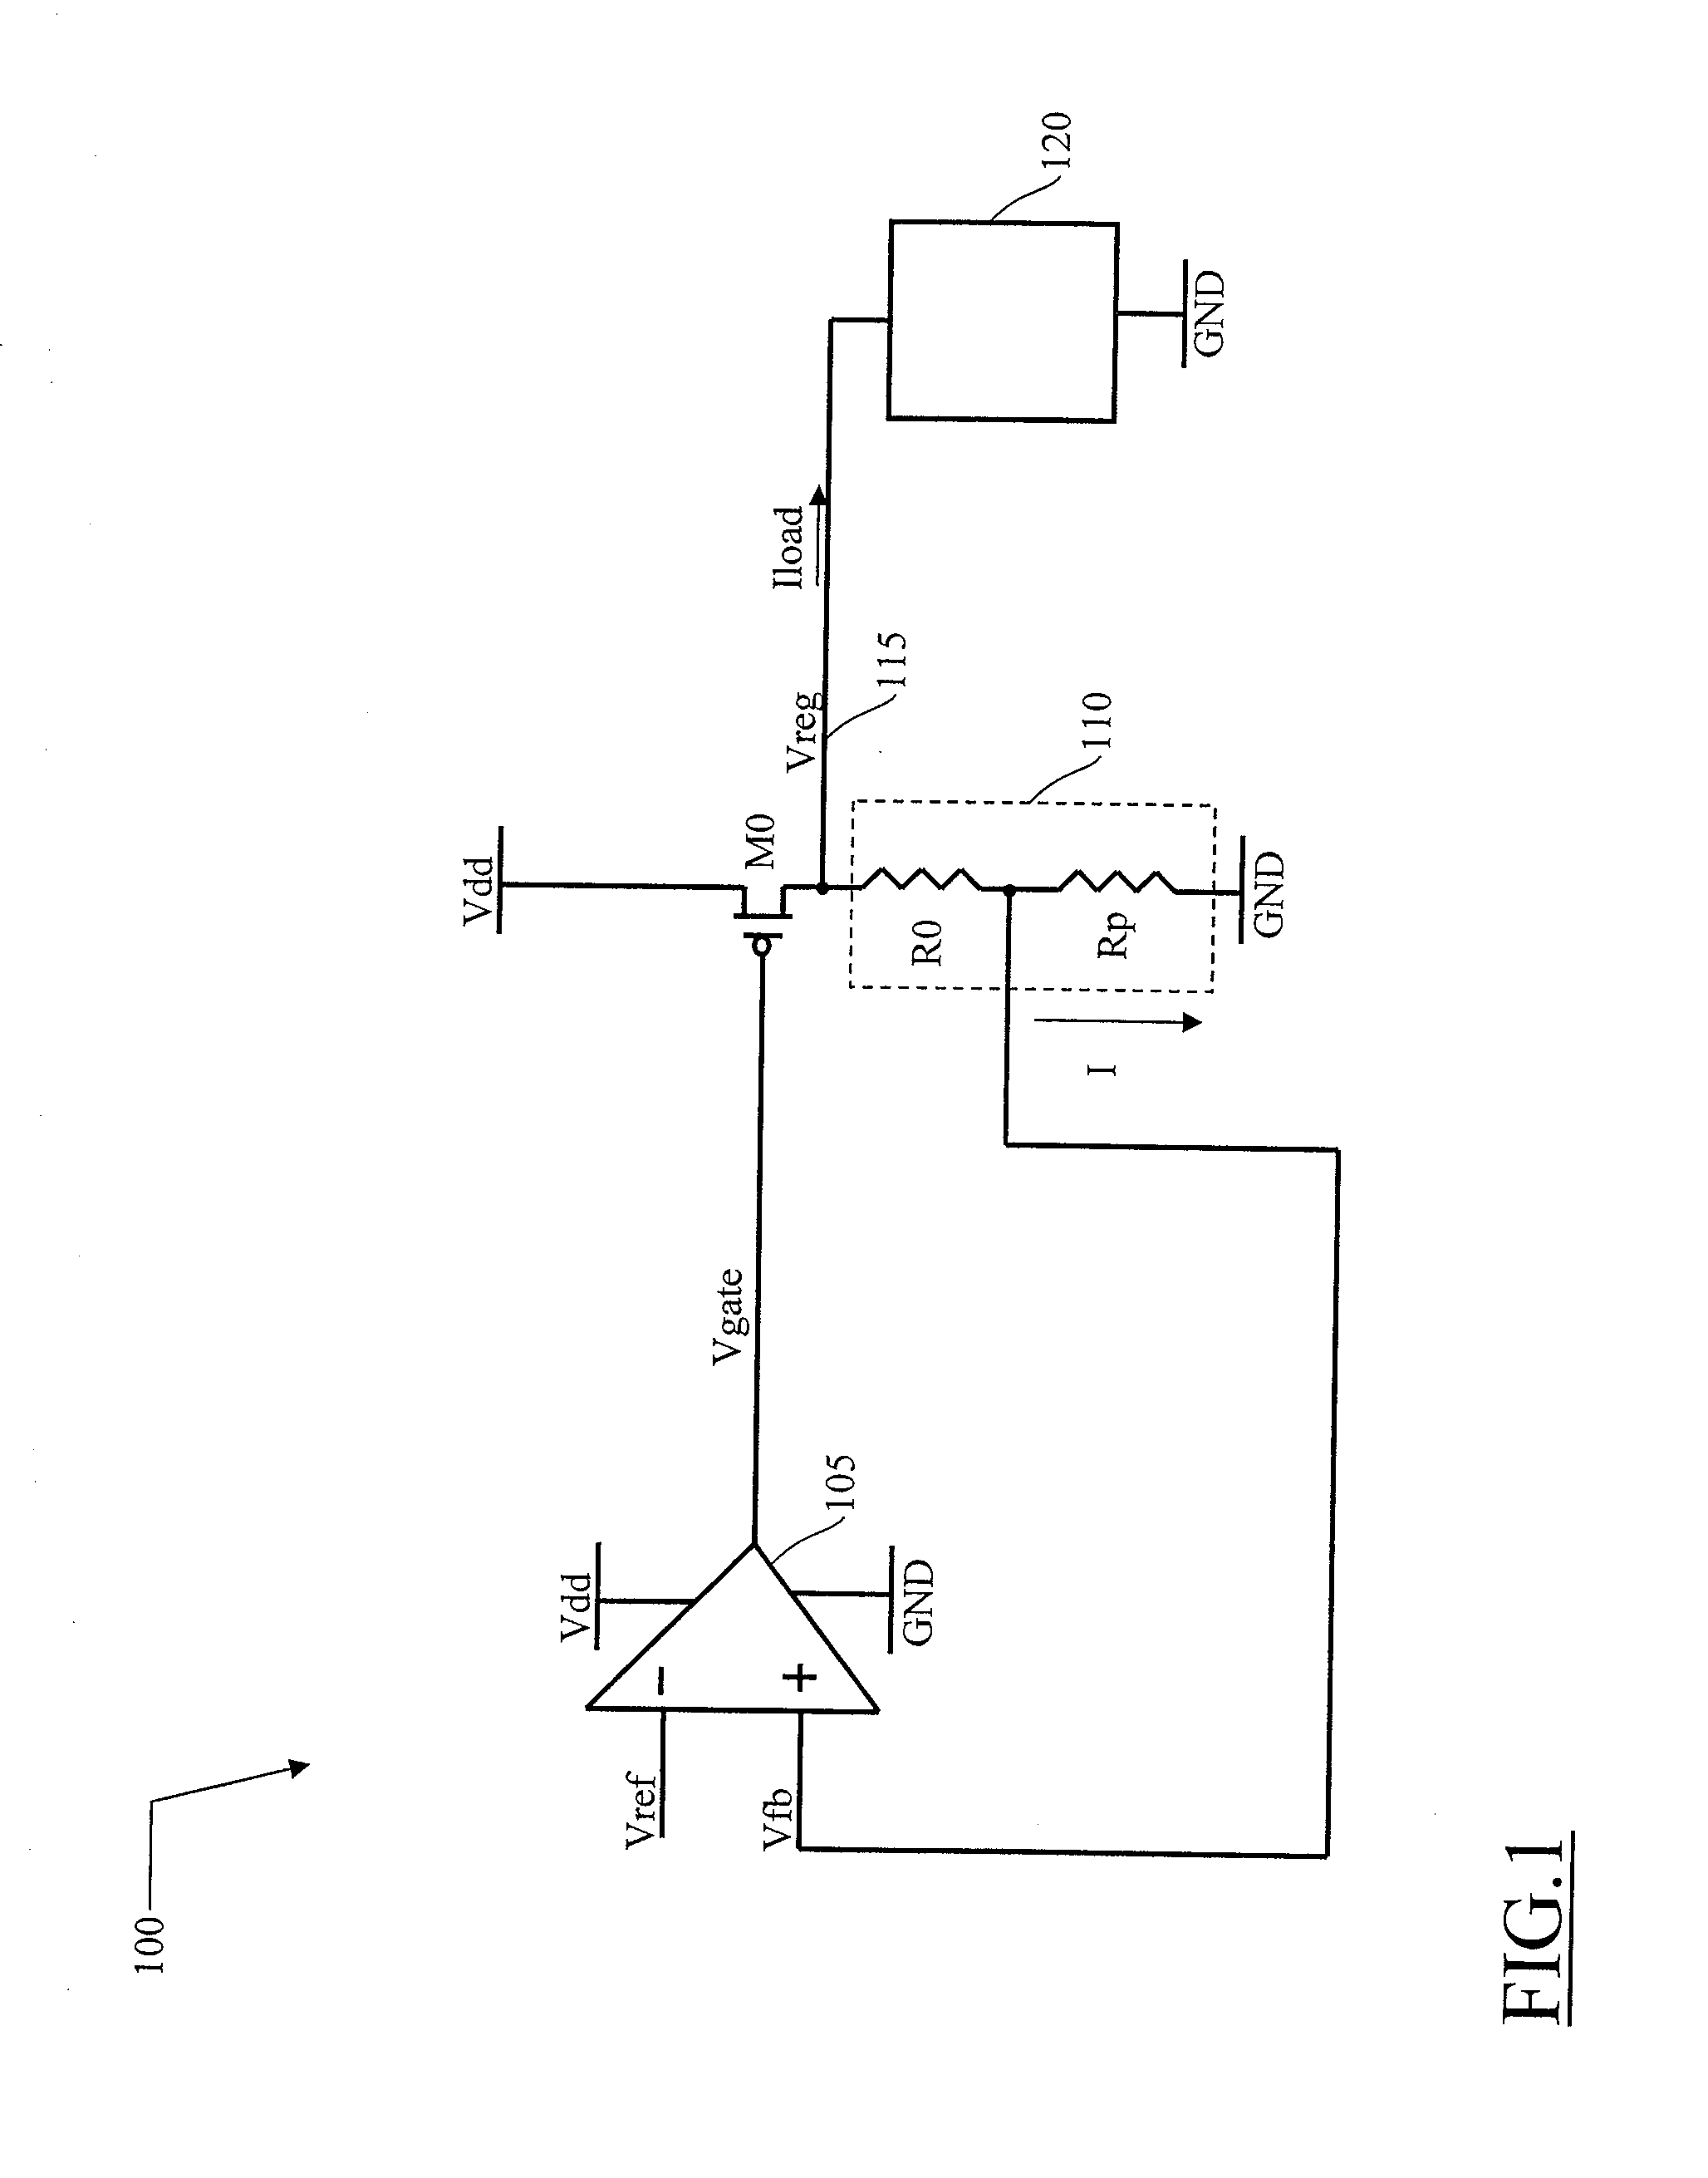 Voltage regulator with leakage current compensation